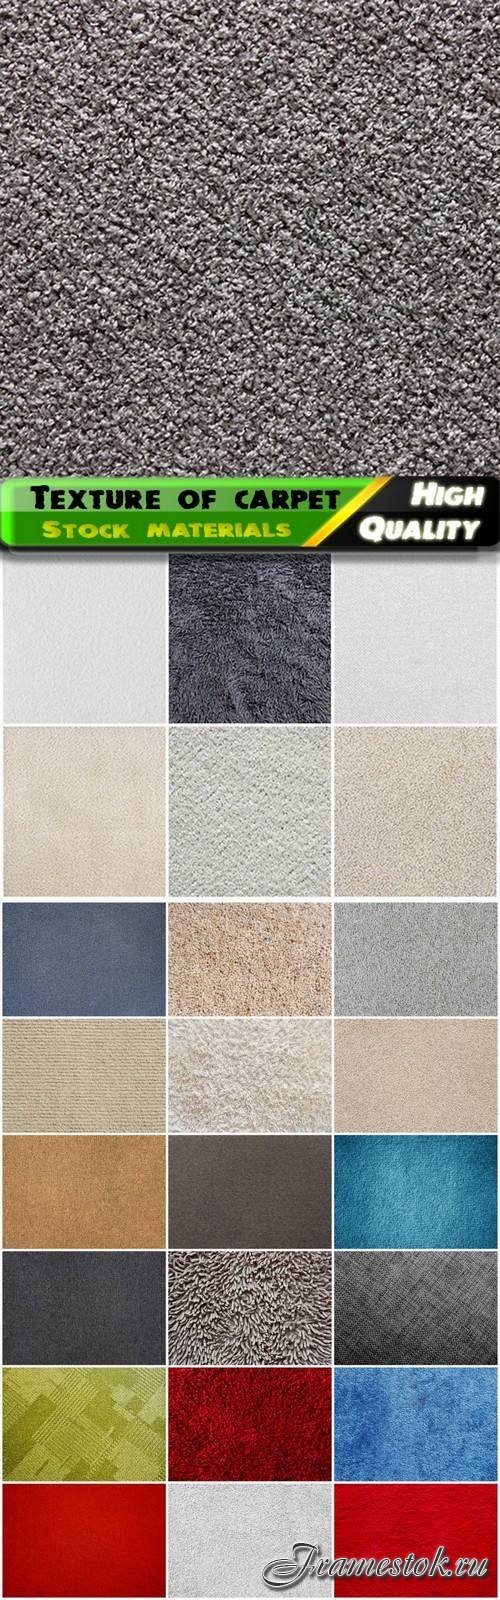 Texture of carpet fleece yarn and wool - 25 HQ Jpg